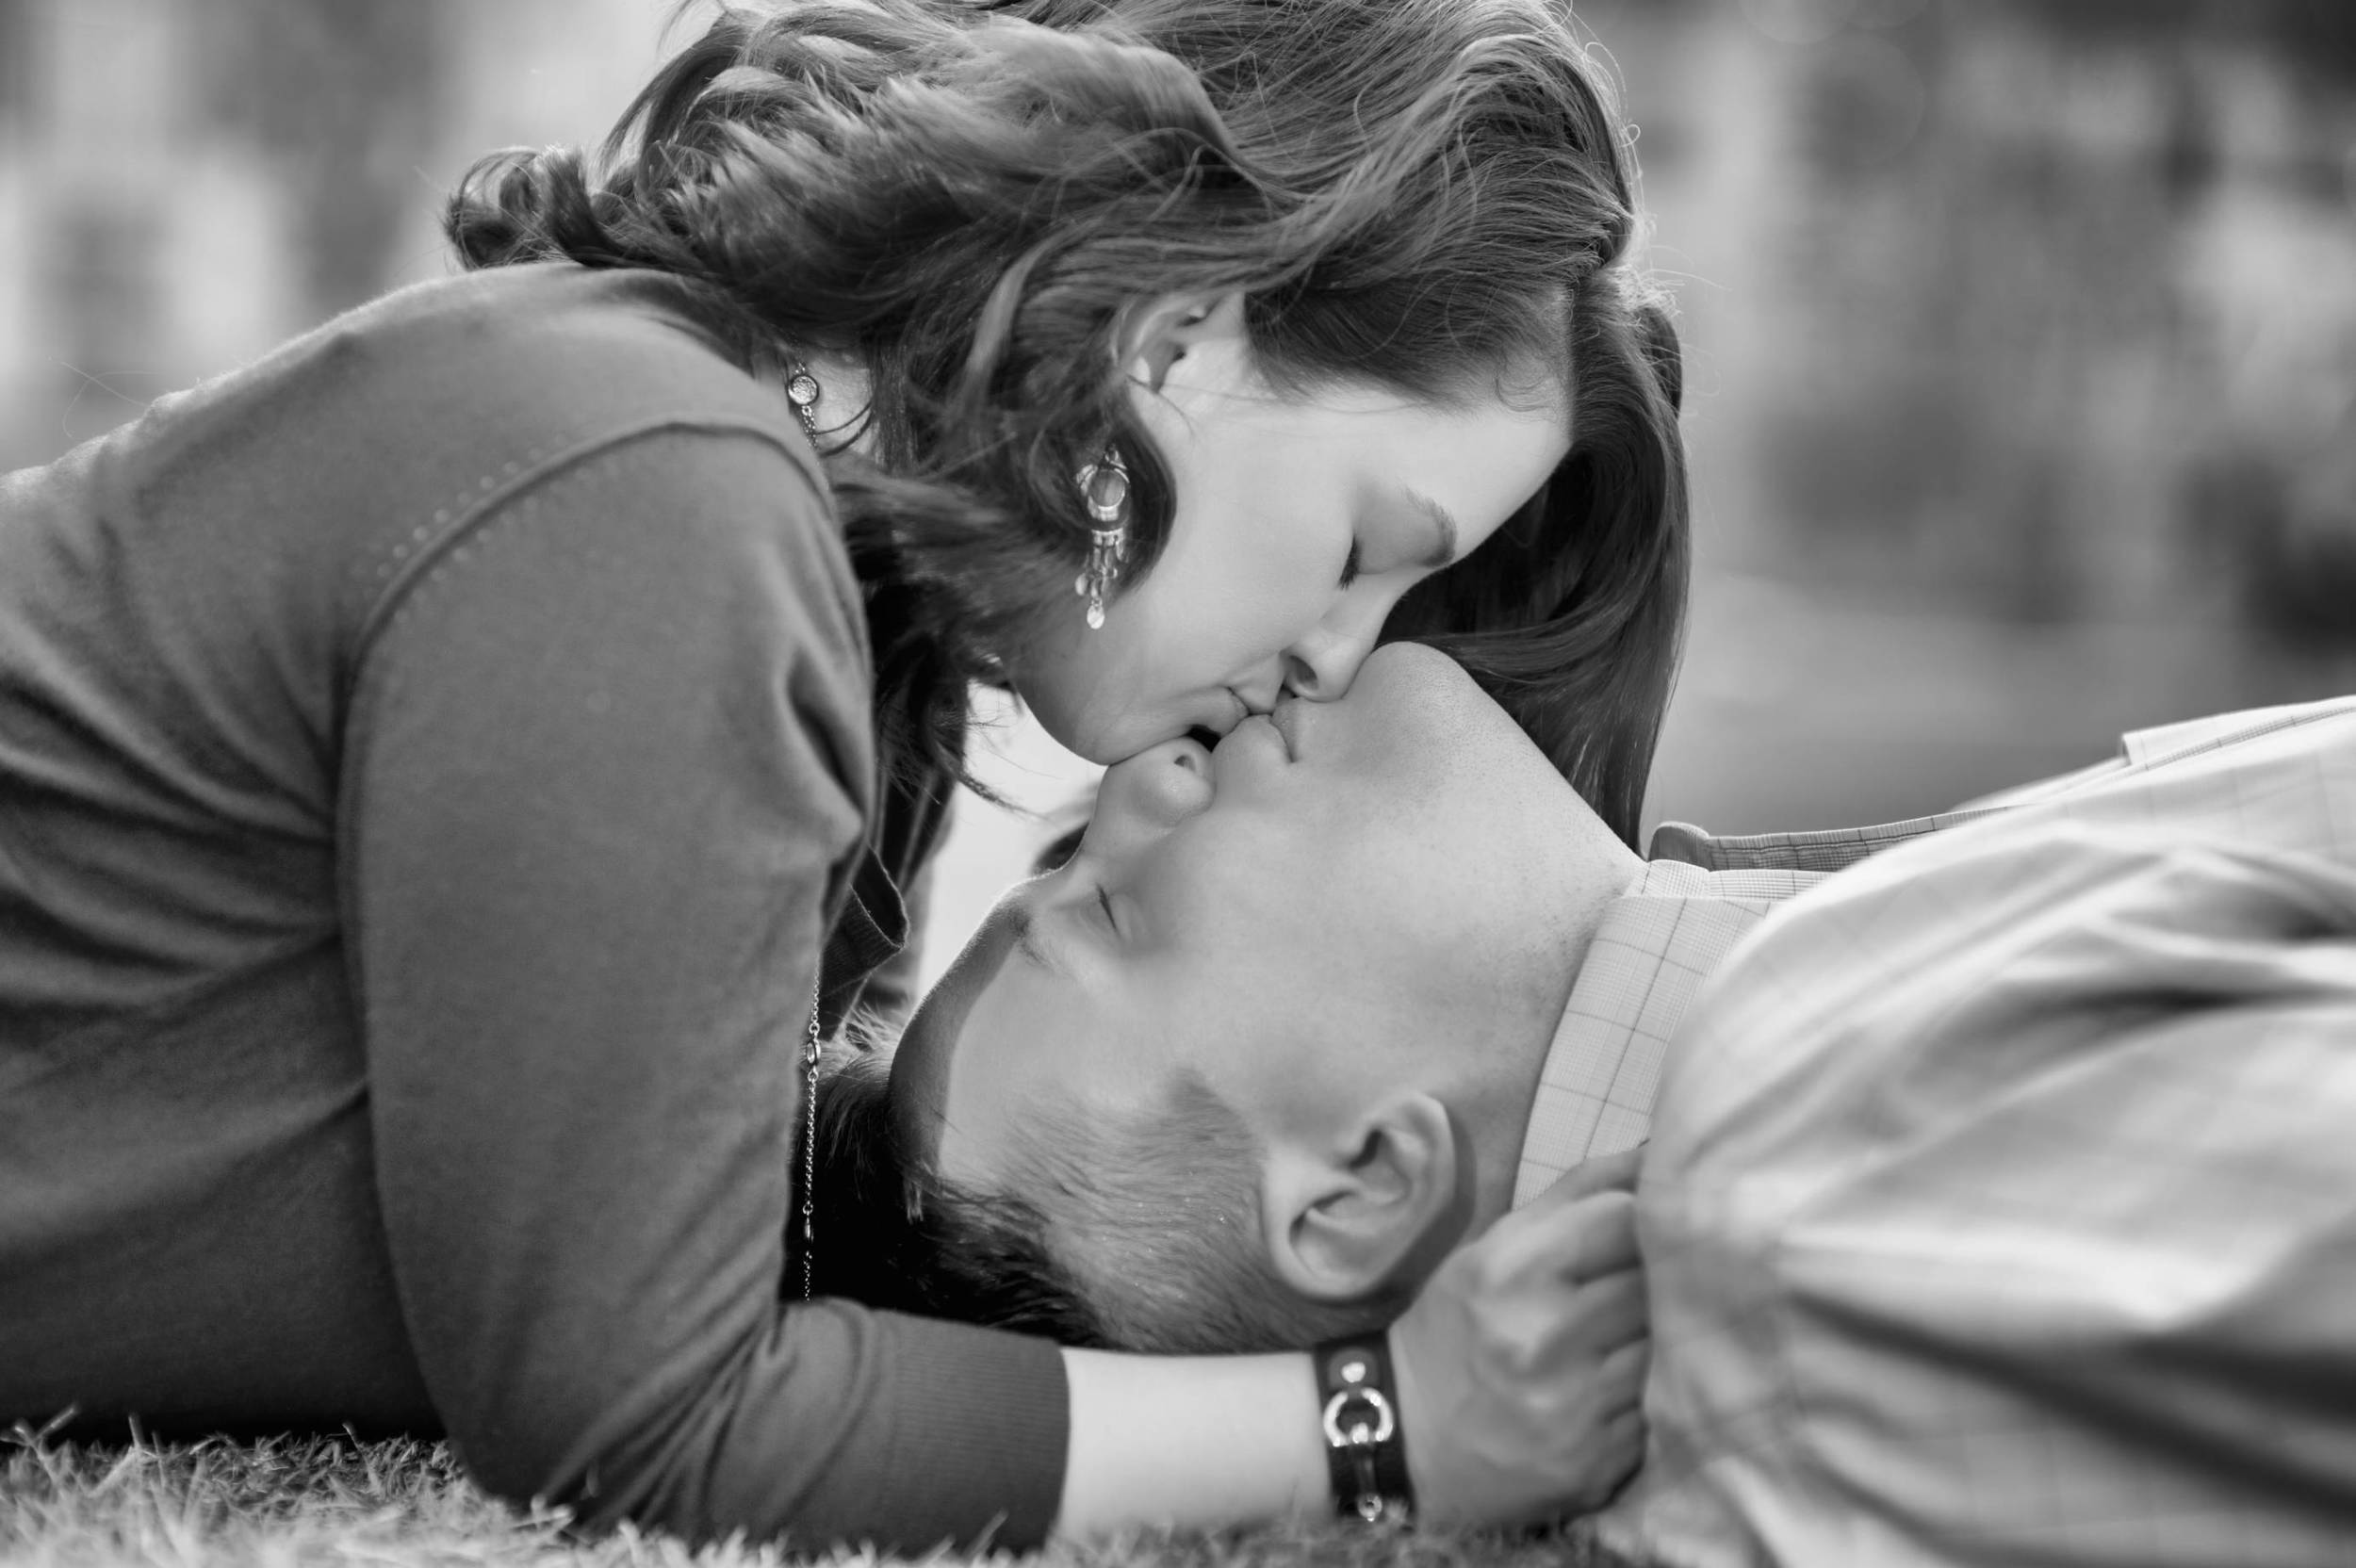 A lovers kiss in the park - Peter Farrar